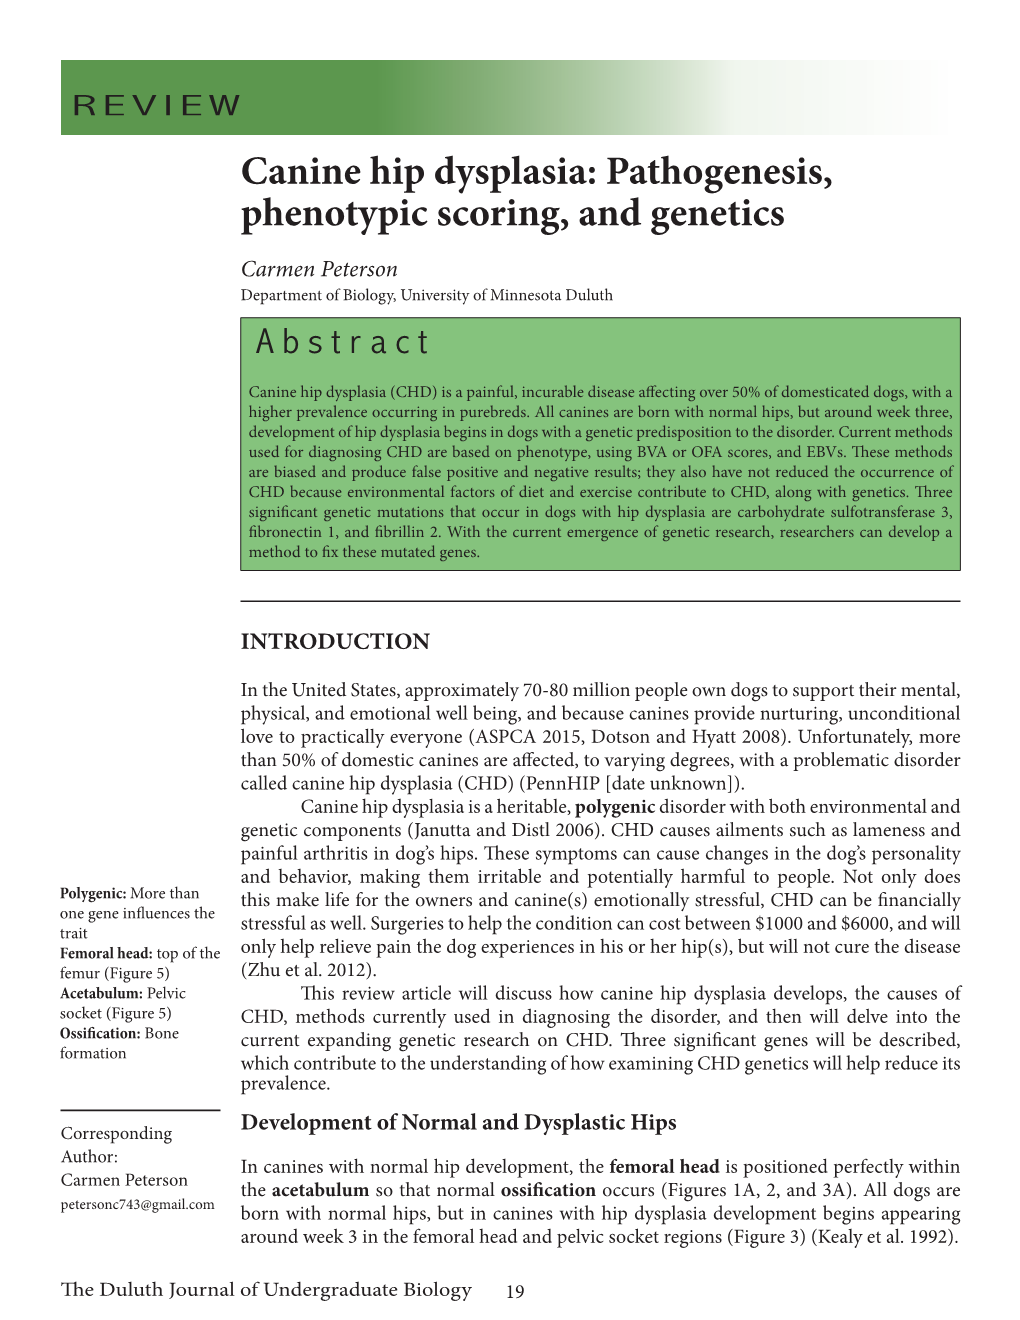 Canine Hip Dysplasia: Pathogenesis, Phenotypic Scoring, and Genetics Carmen Peterson Department of Biology, University of Minnesota Duluth Abstract